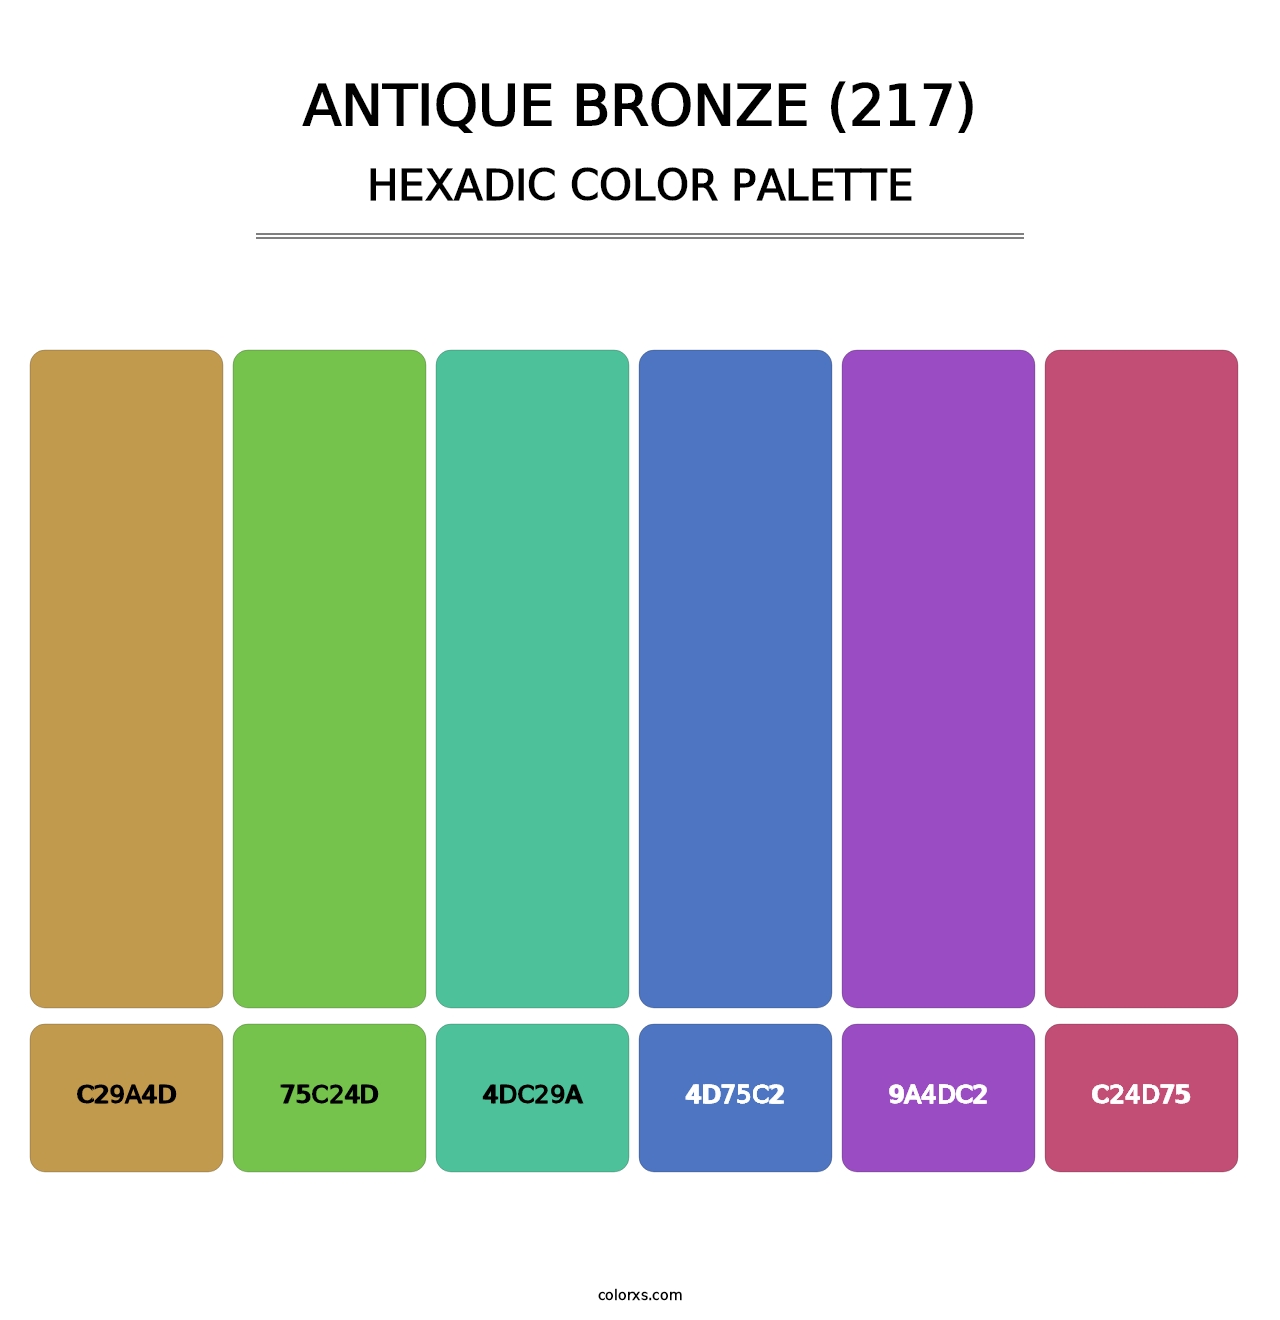 Antique Bronze (217) - Hexadic Color Palette